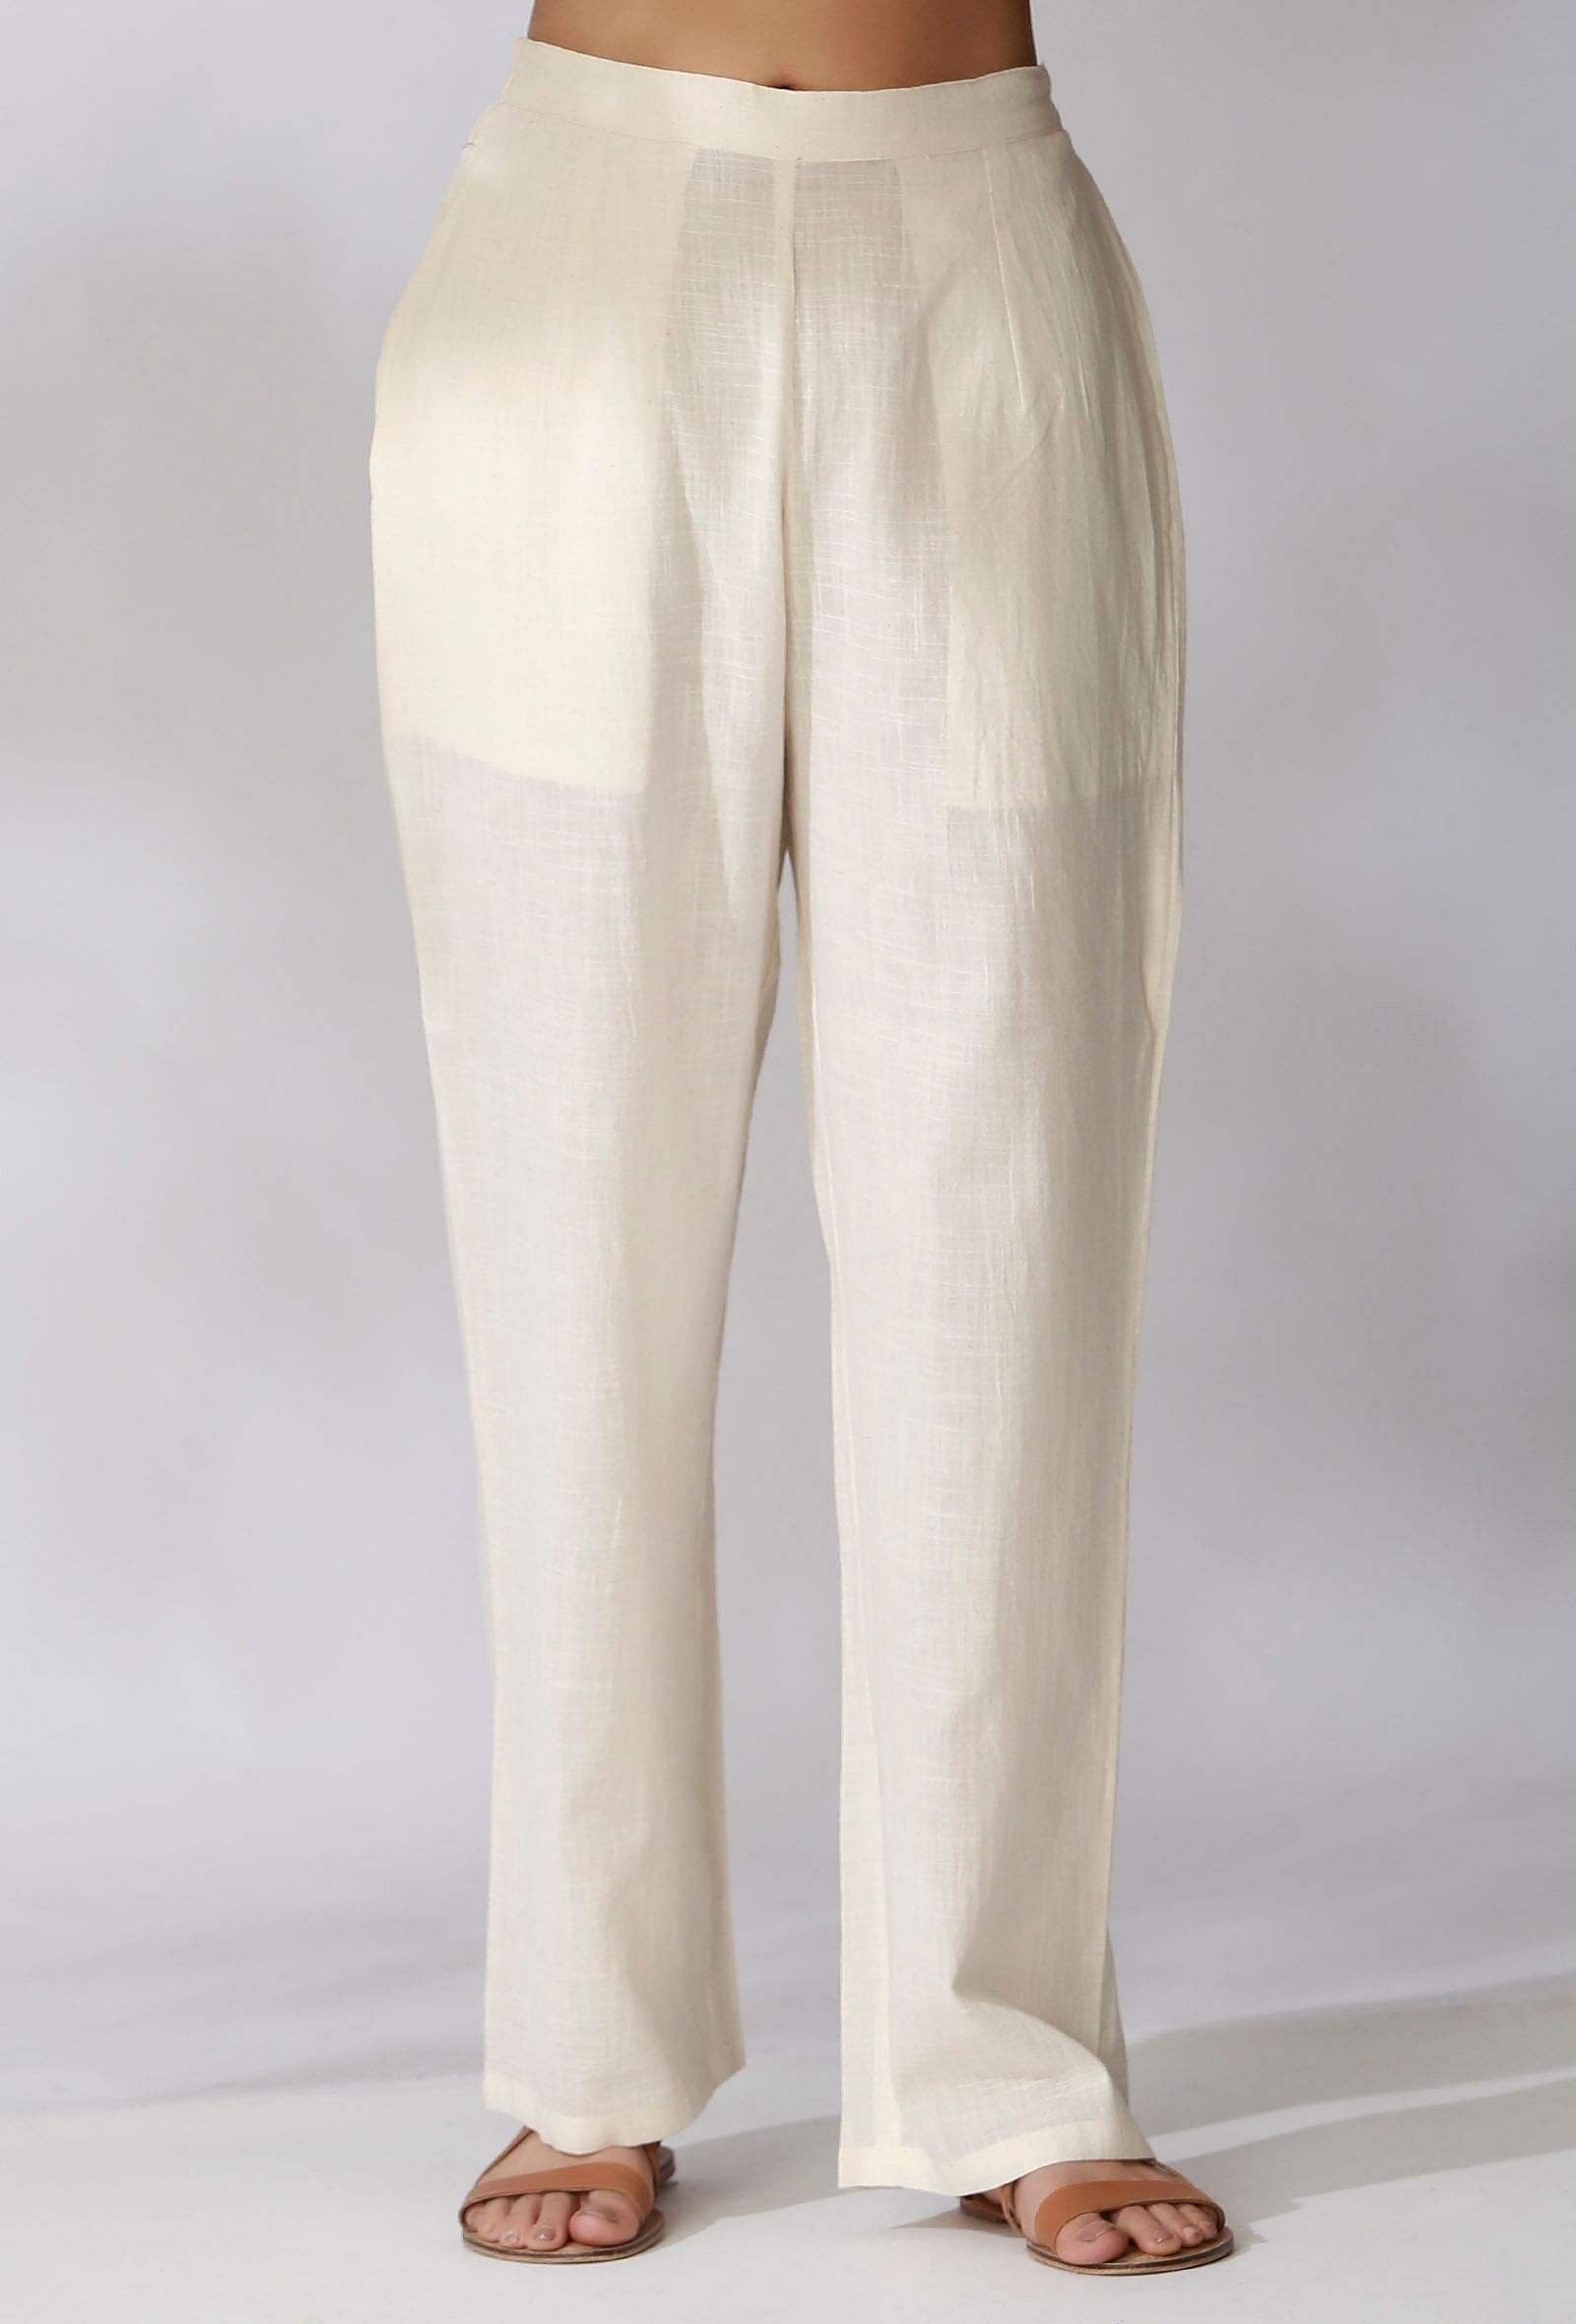 Finch Fly Plain Ladies White Cotton Trouser Pant